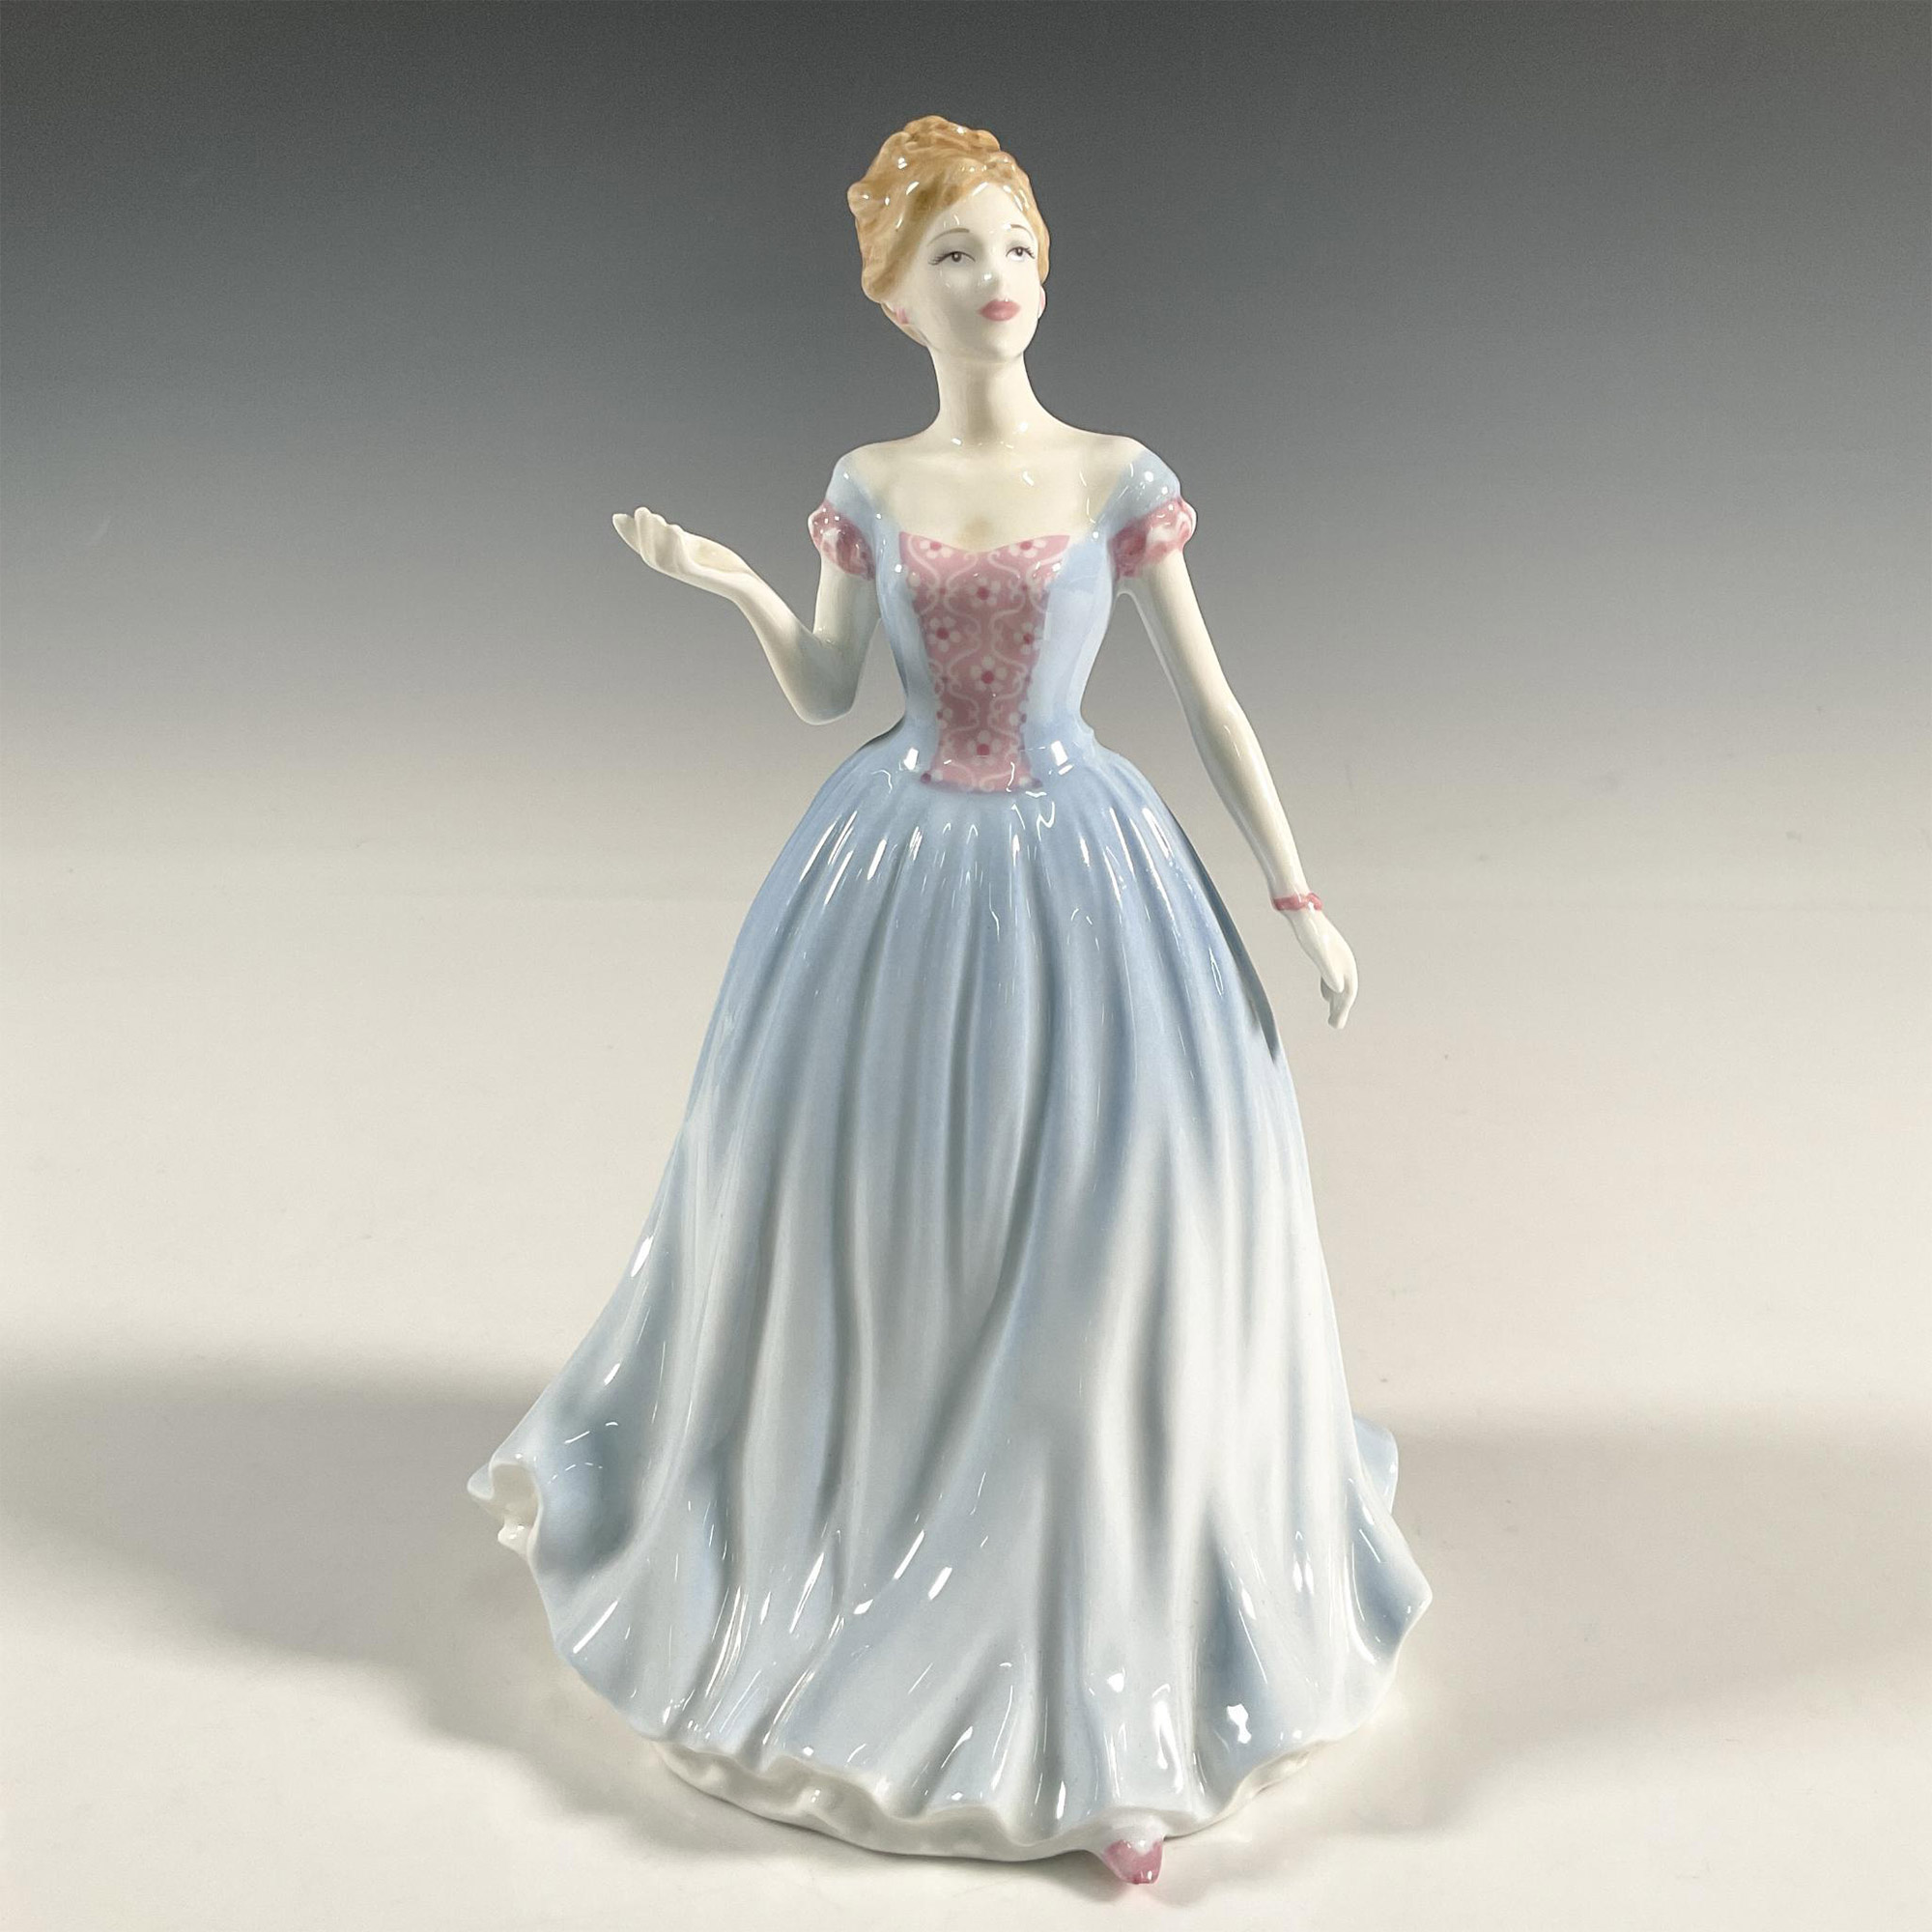 Rosemary HN4662 - Royal Doulton Figurine